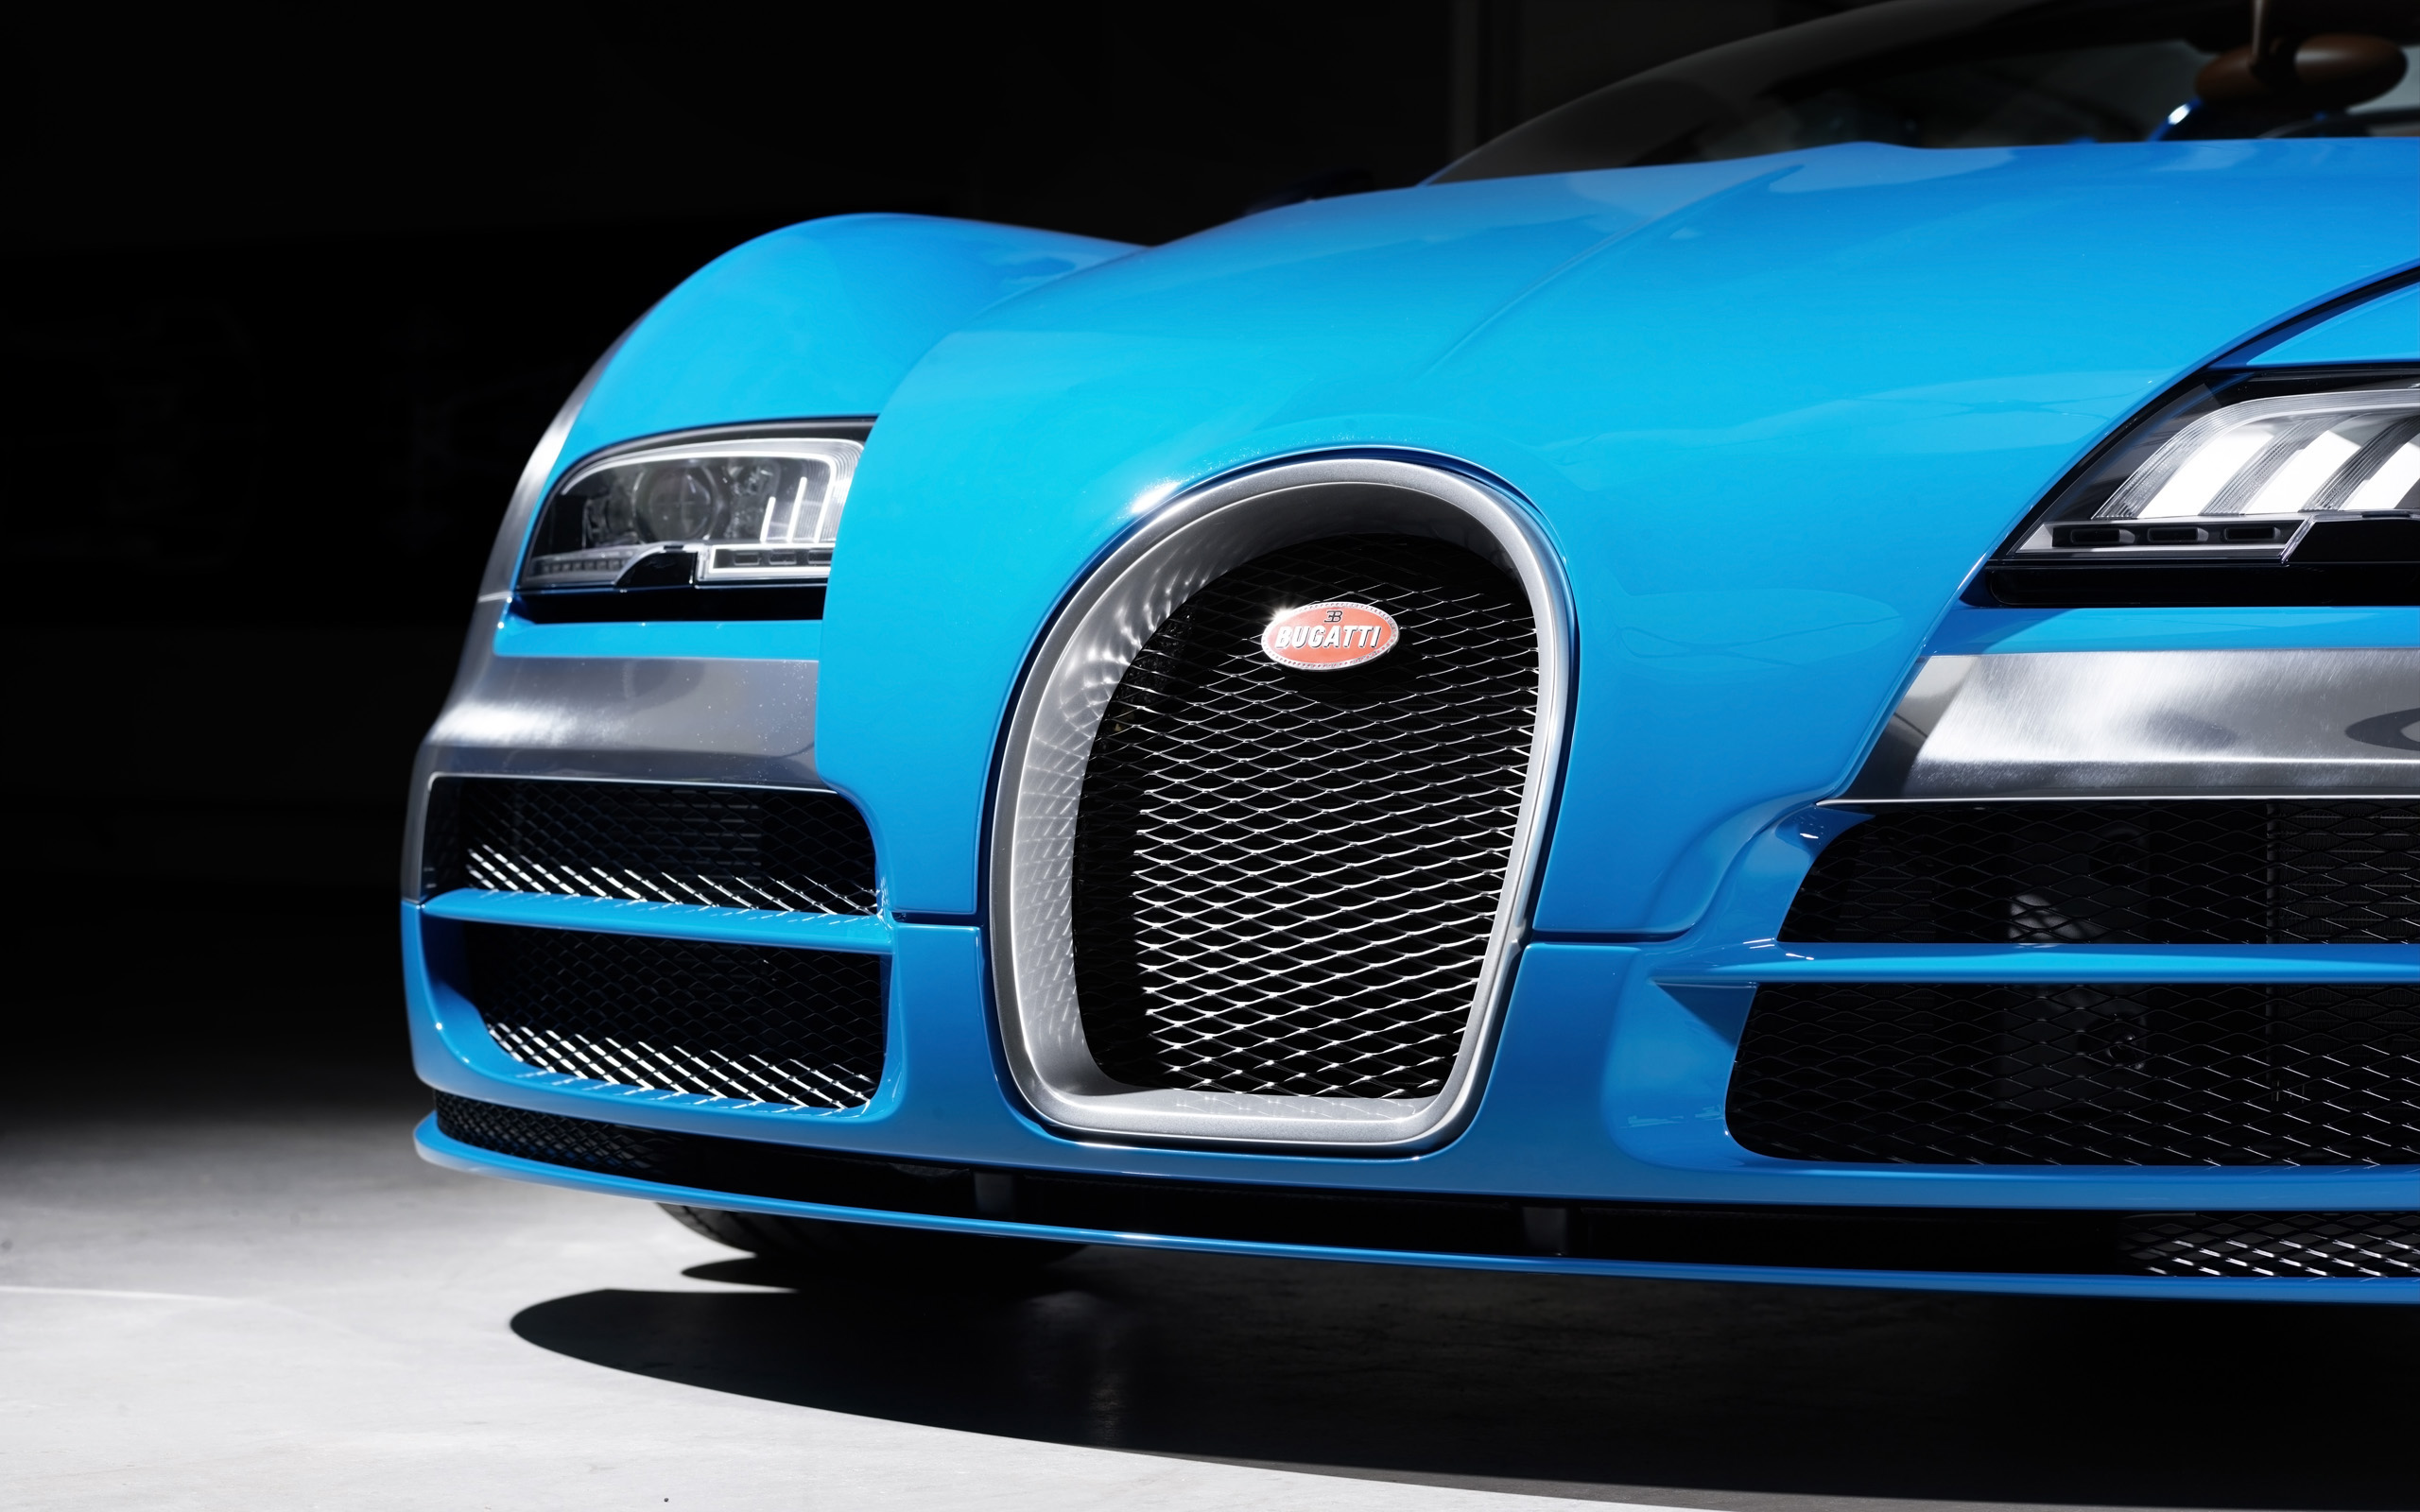 2013, Bugatti, Veyron, Grand, Sport, Roadster, Vitesse, Meo, Constantini, Supercar Wallpaper